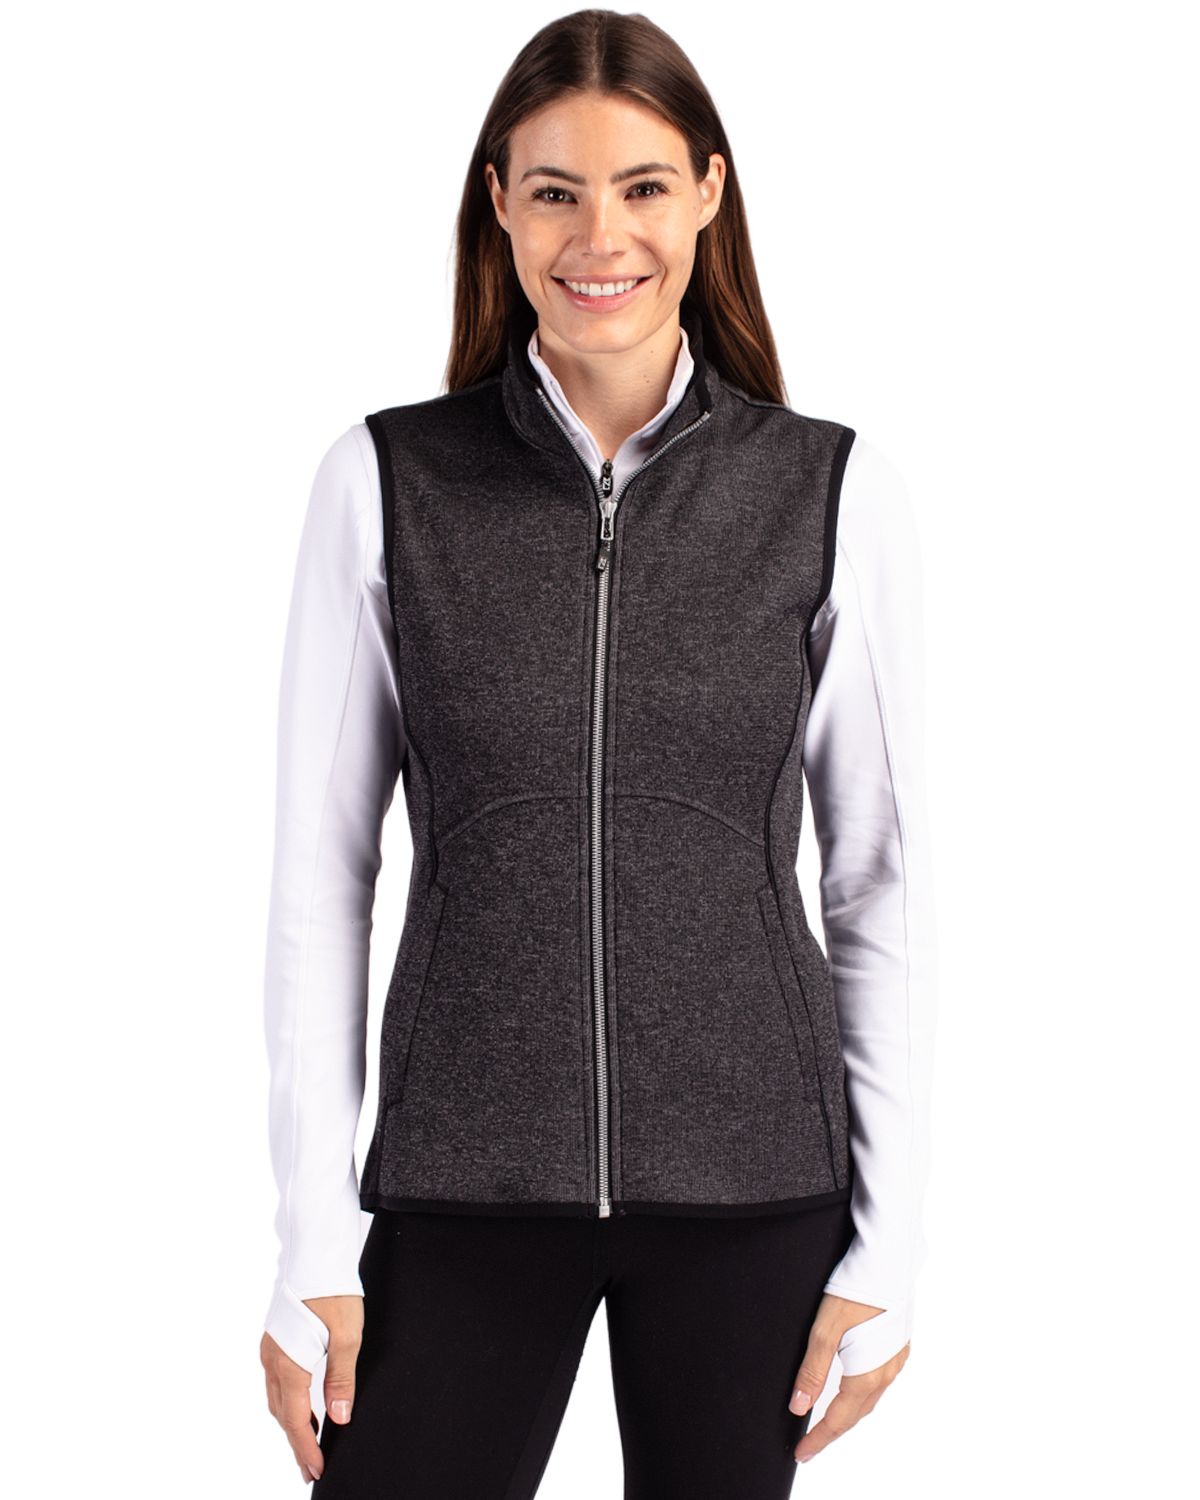 Plus Size Mainsail Women Sweater Knit Full Zip Vest - Liberty navy heather